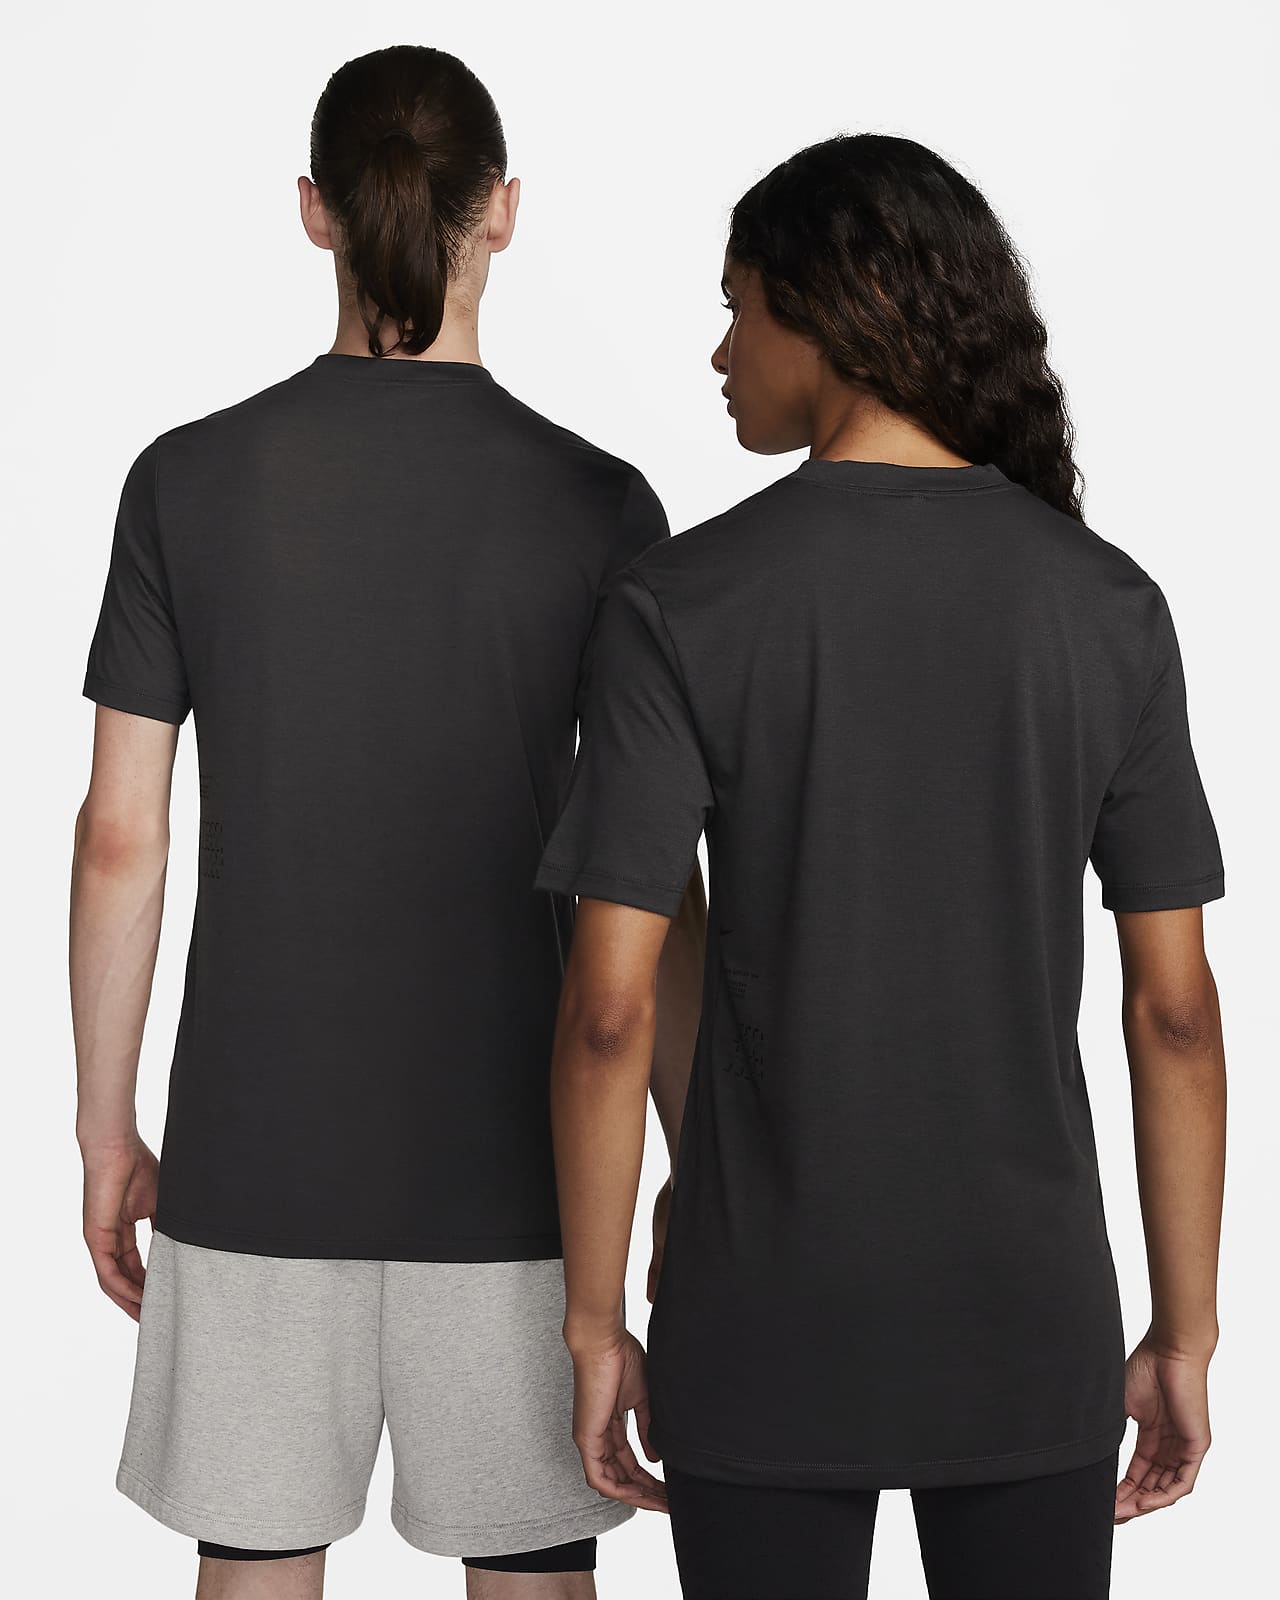 Nike x MMW Men's Short-Sleeve Top